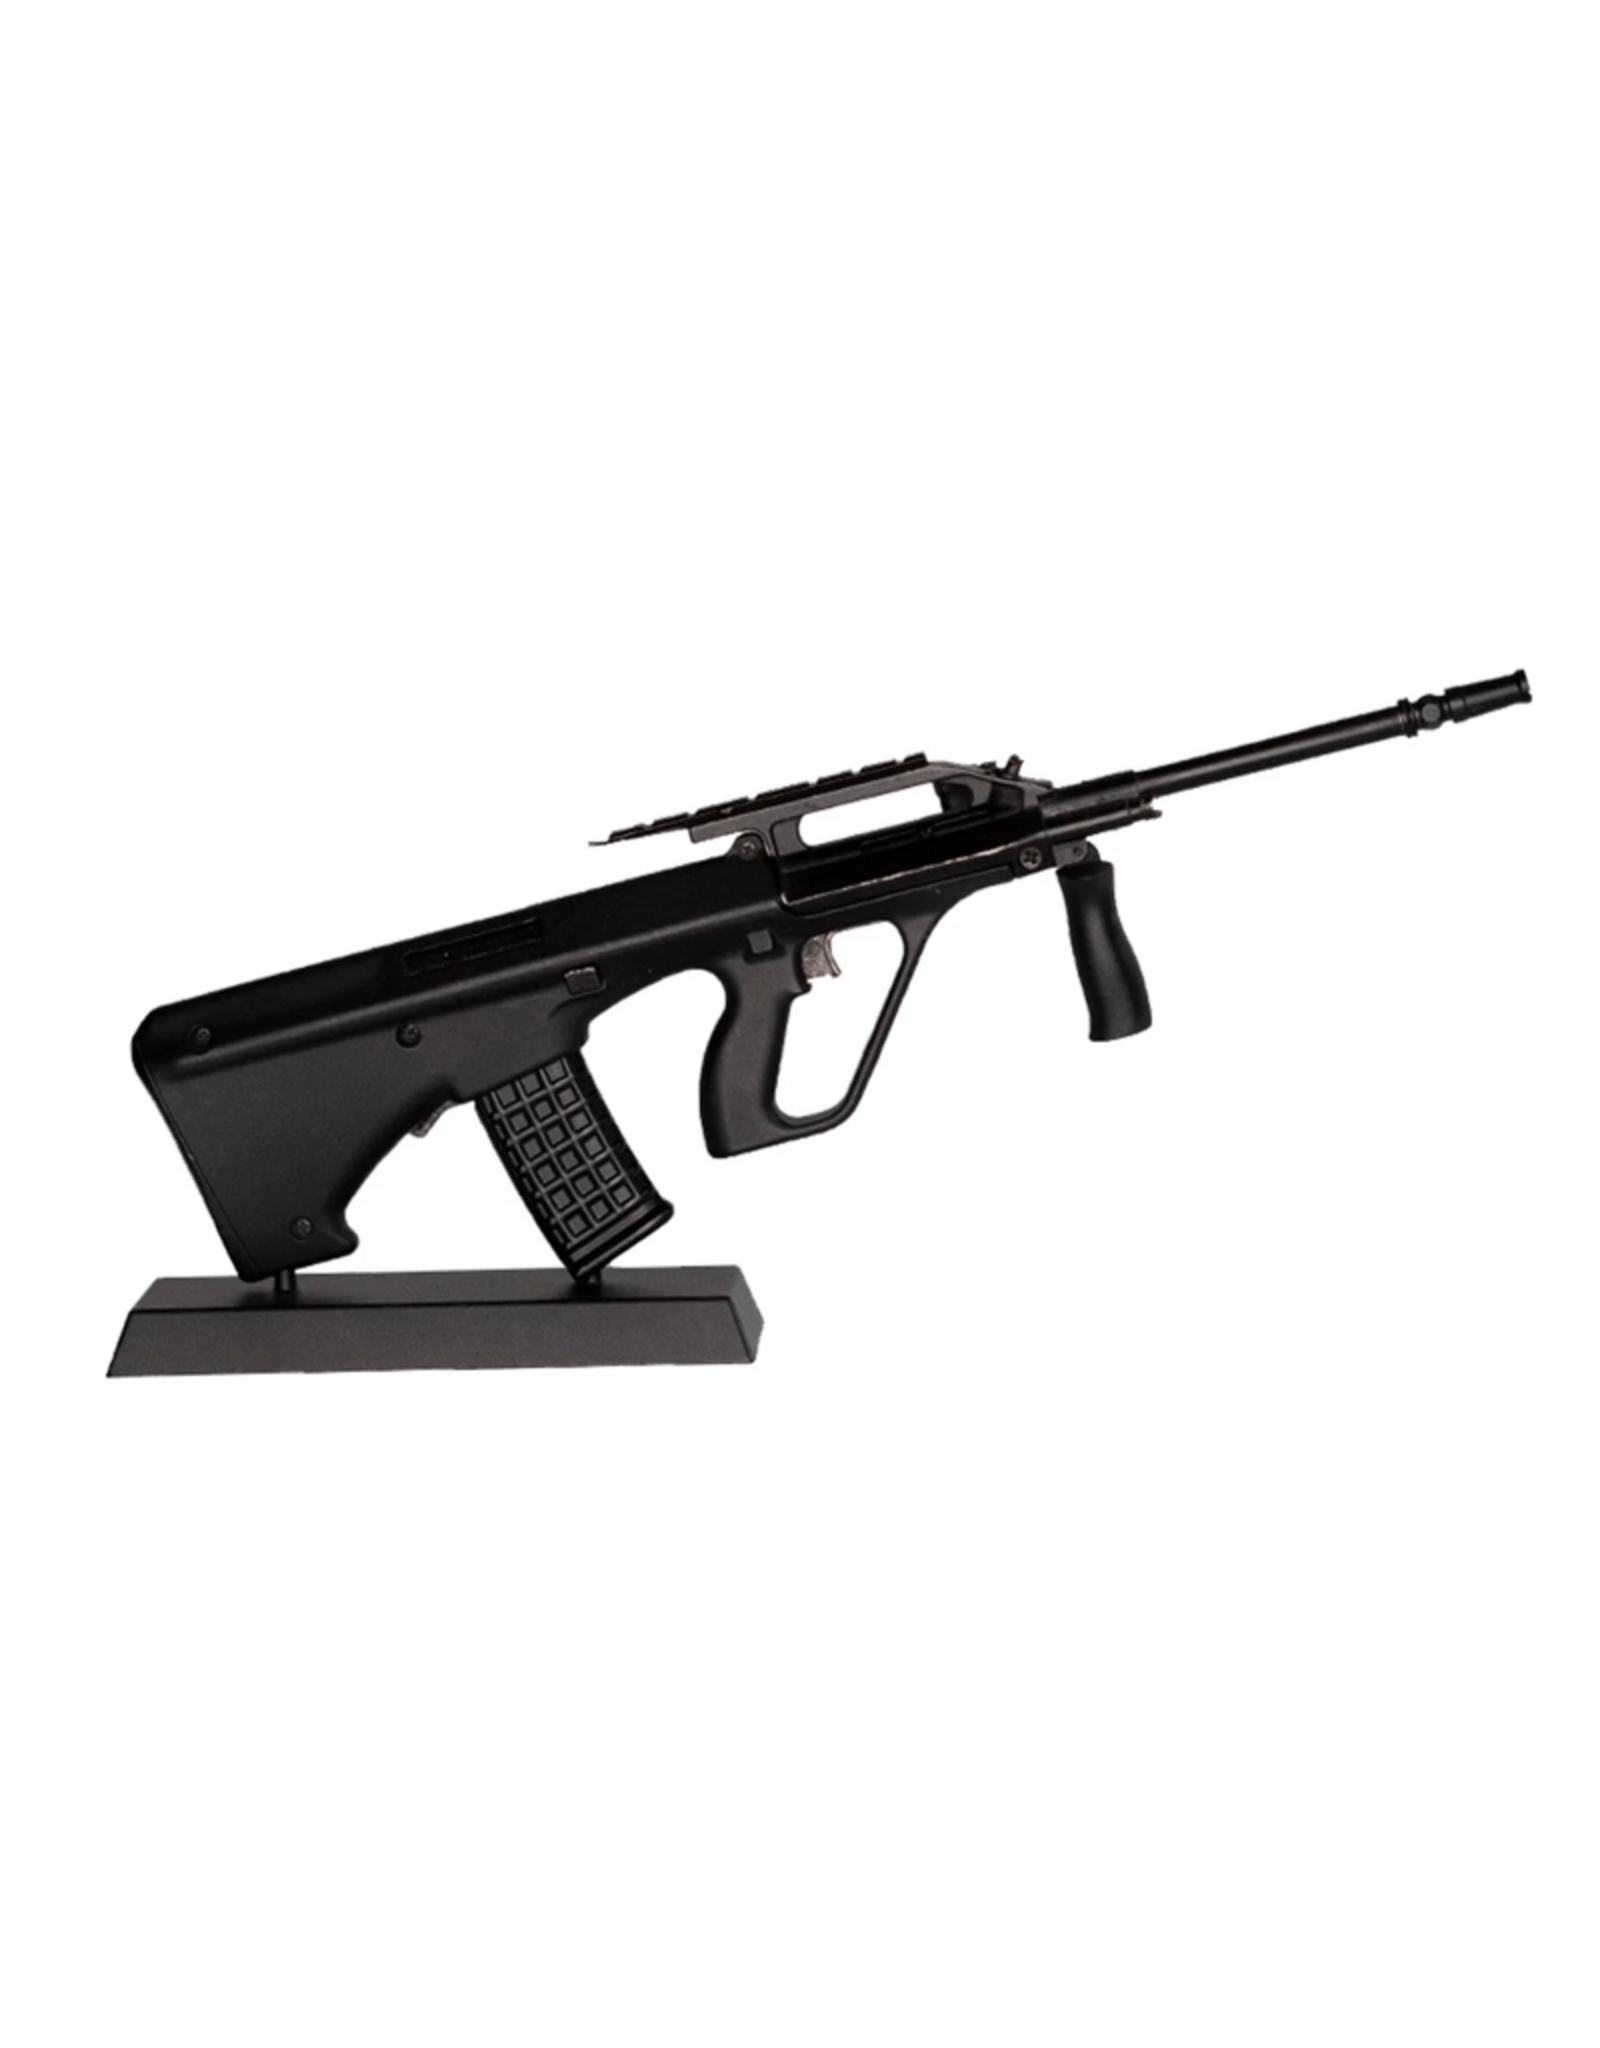 Goat Guns GGBP-Black Bullpup Model